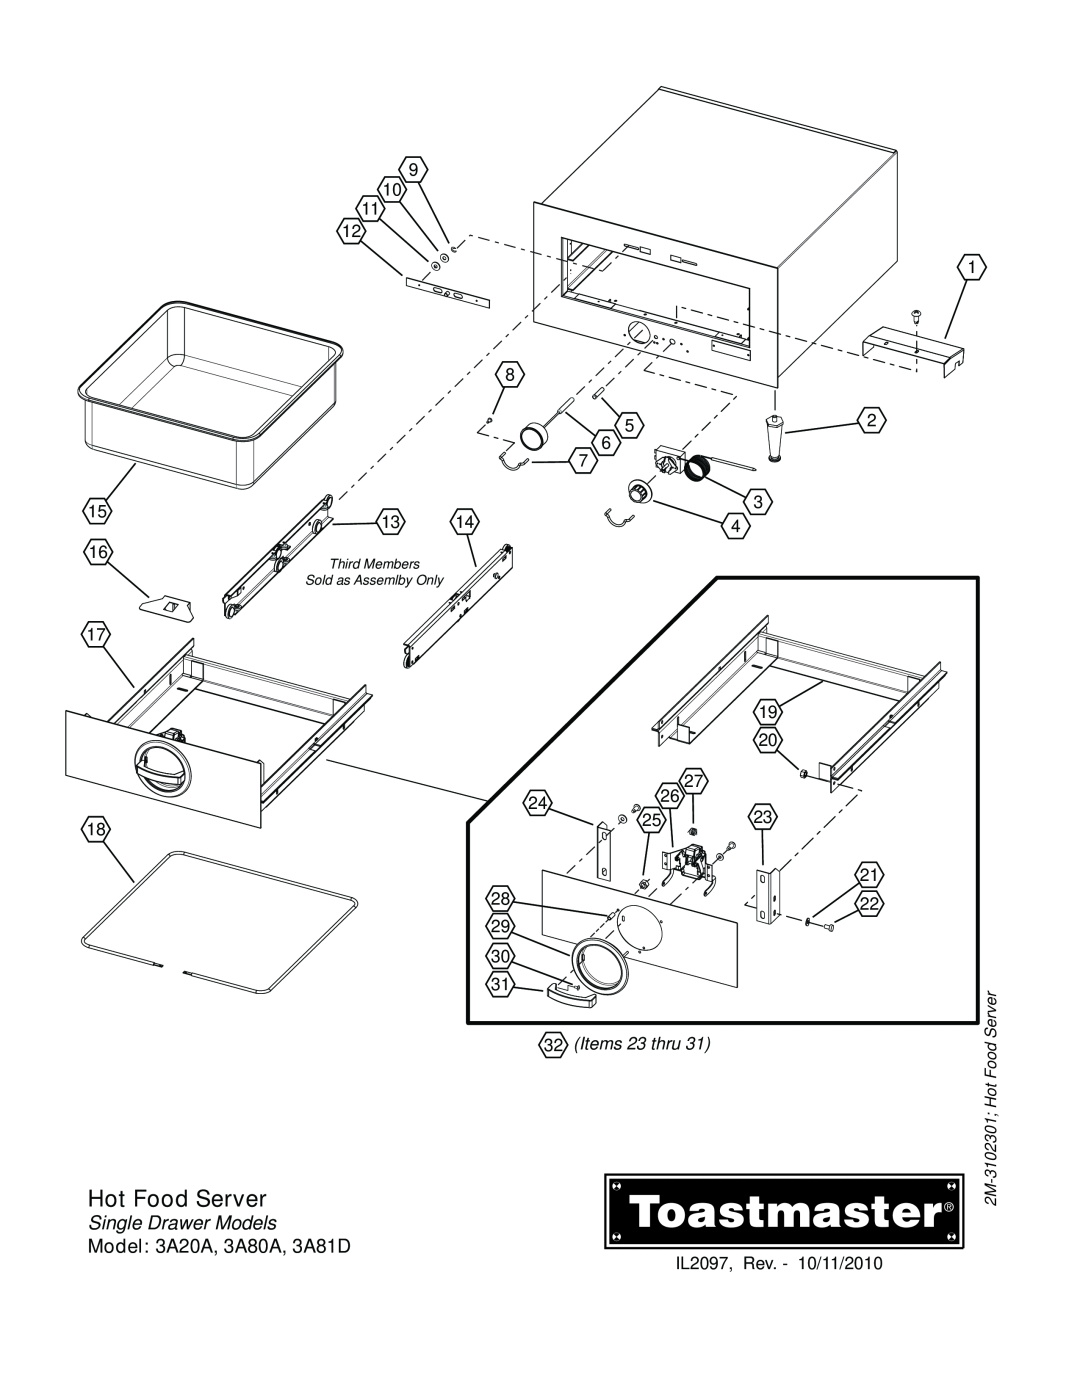 Toastmaster 3A80A, 3C84A, 3B84D, 3B20A, 3C80A, 3A20A, 3B80A, 3D8XD Hot Food Server, Single Drawer Models, 9 10, Items 23 thru 